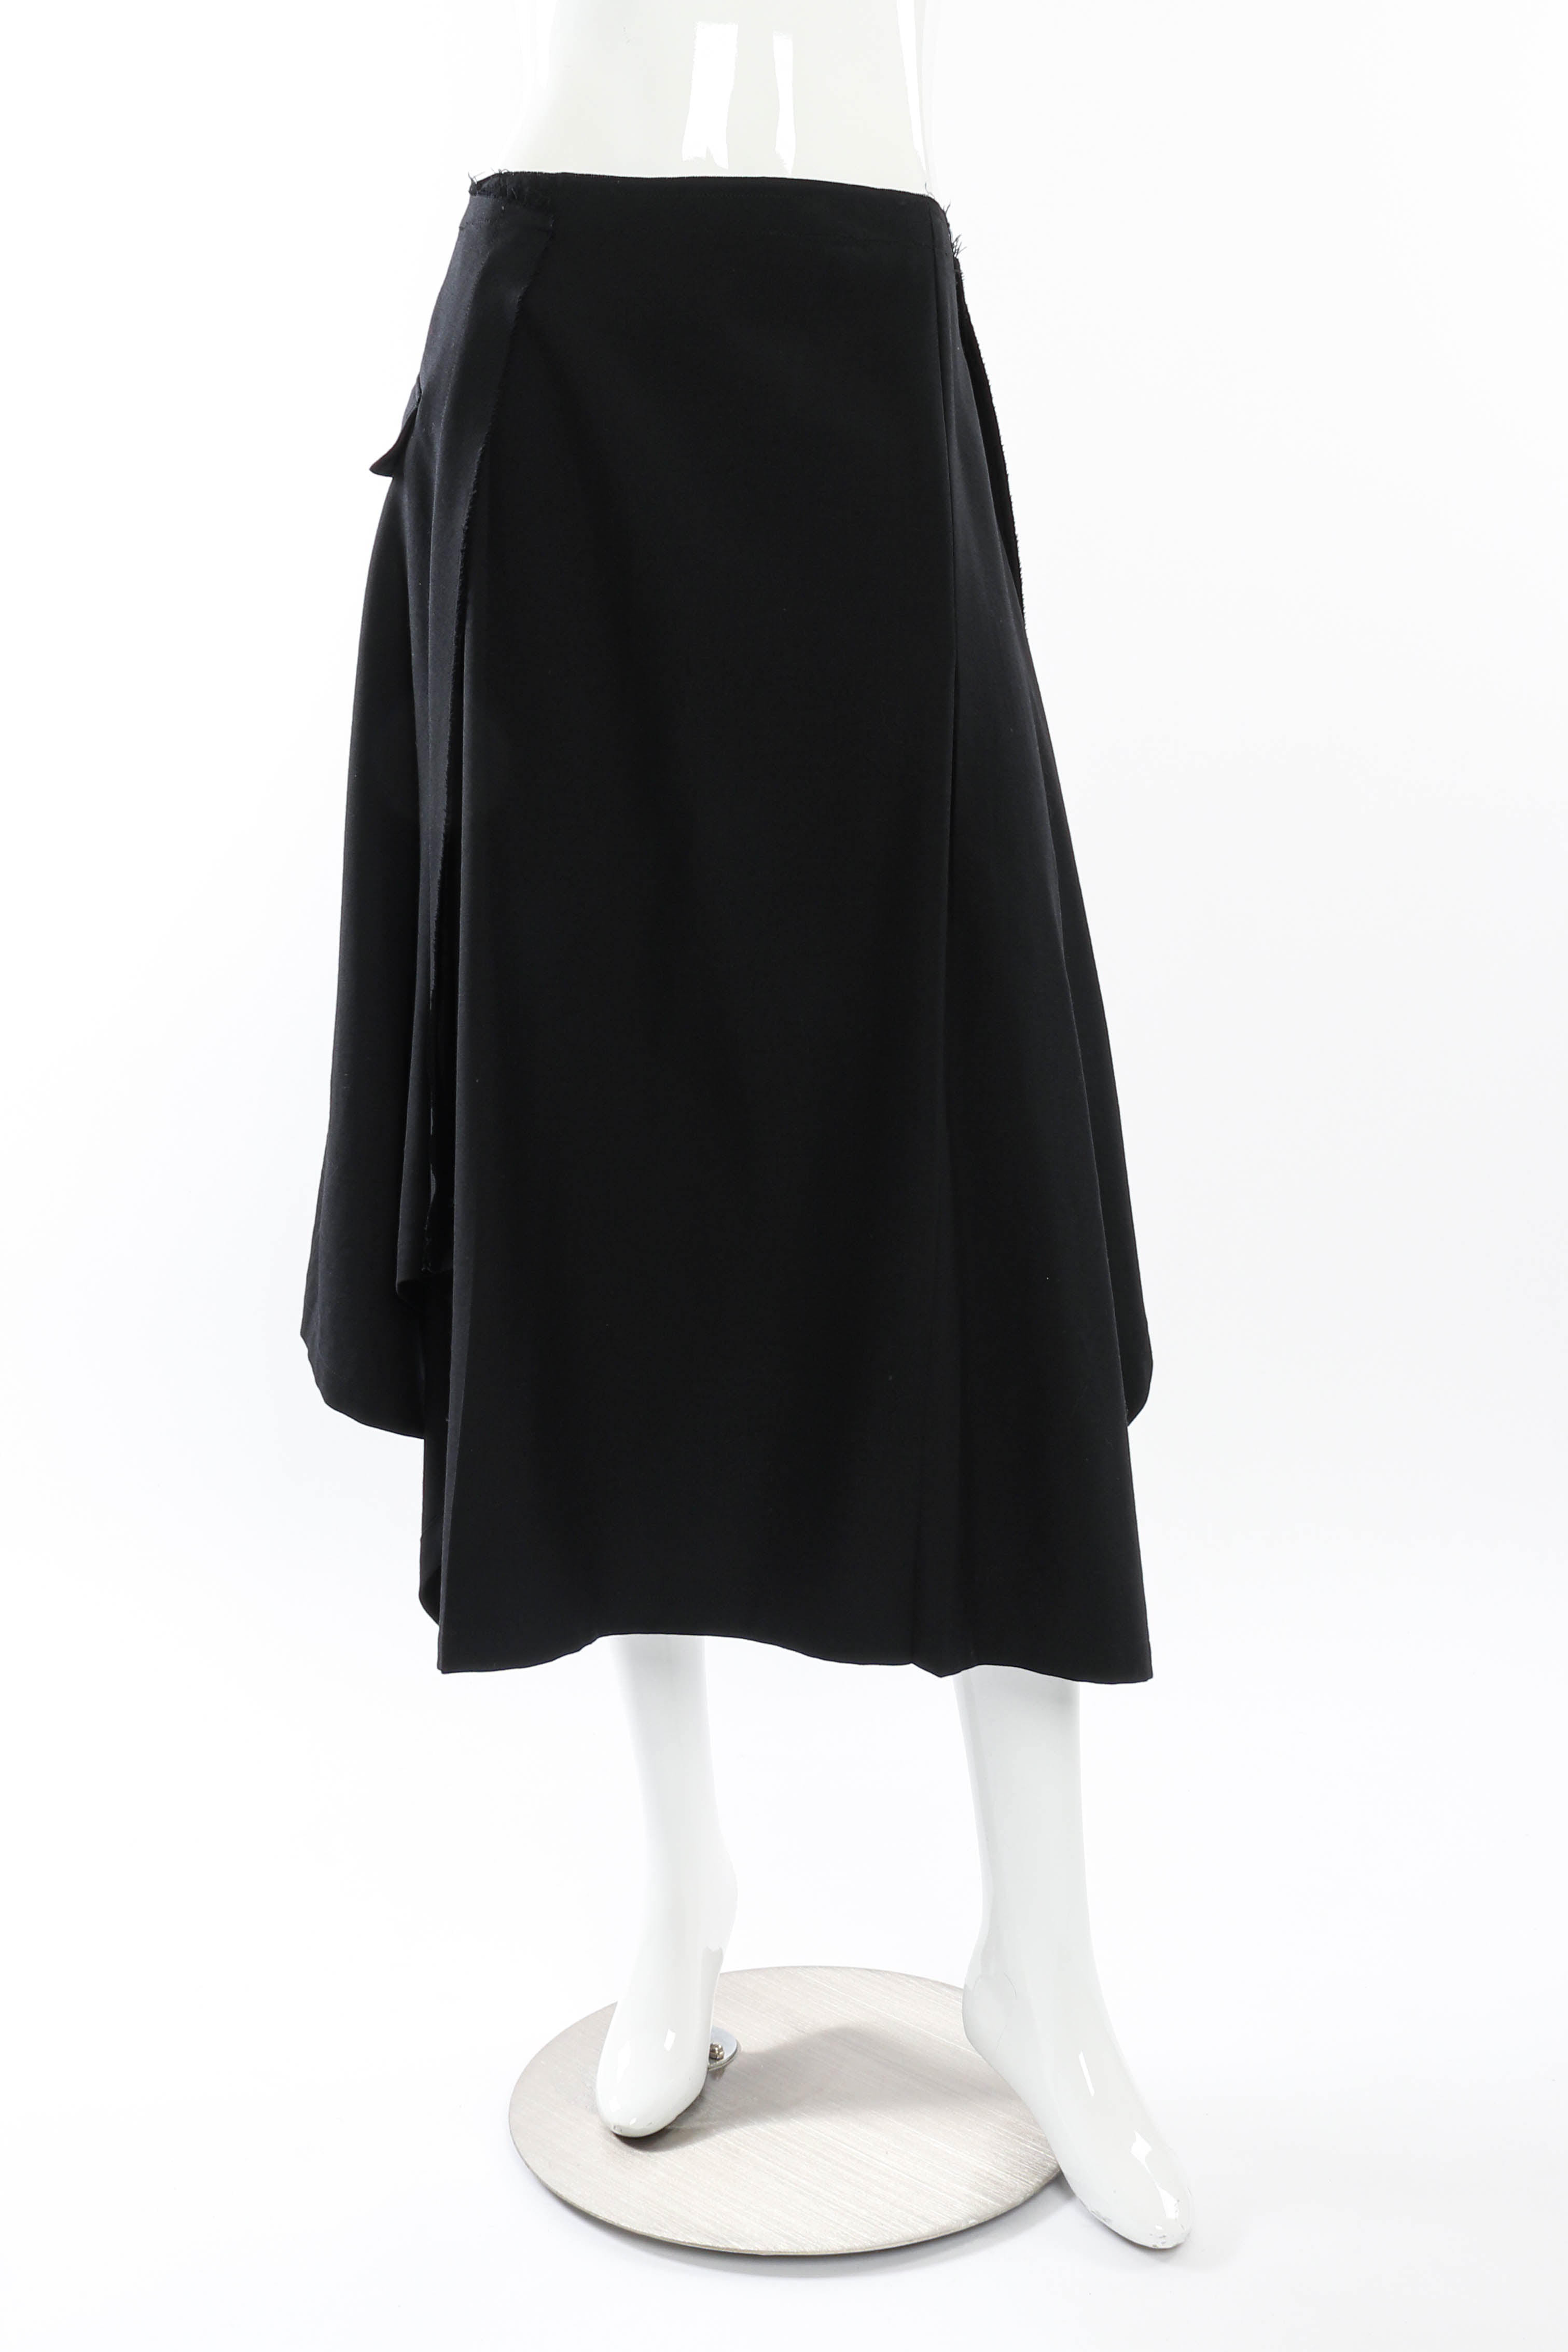 Yohji Yamamoto Asymmetric Hem Skirt front on mannequin @recessla